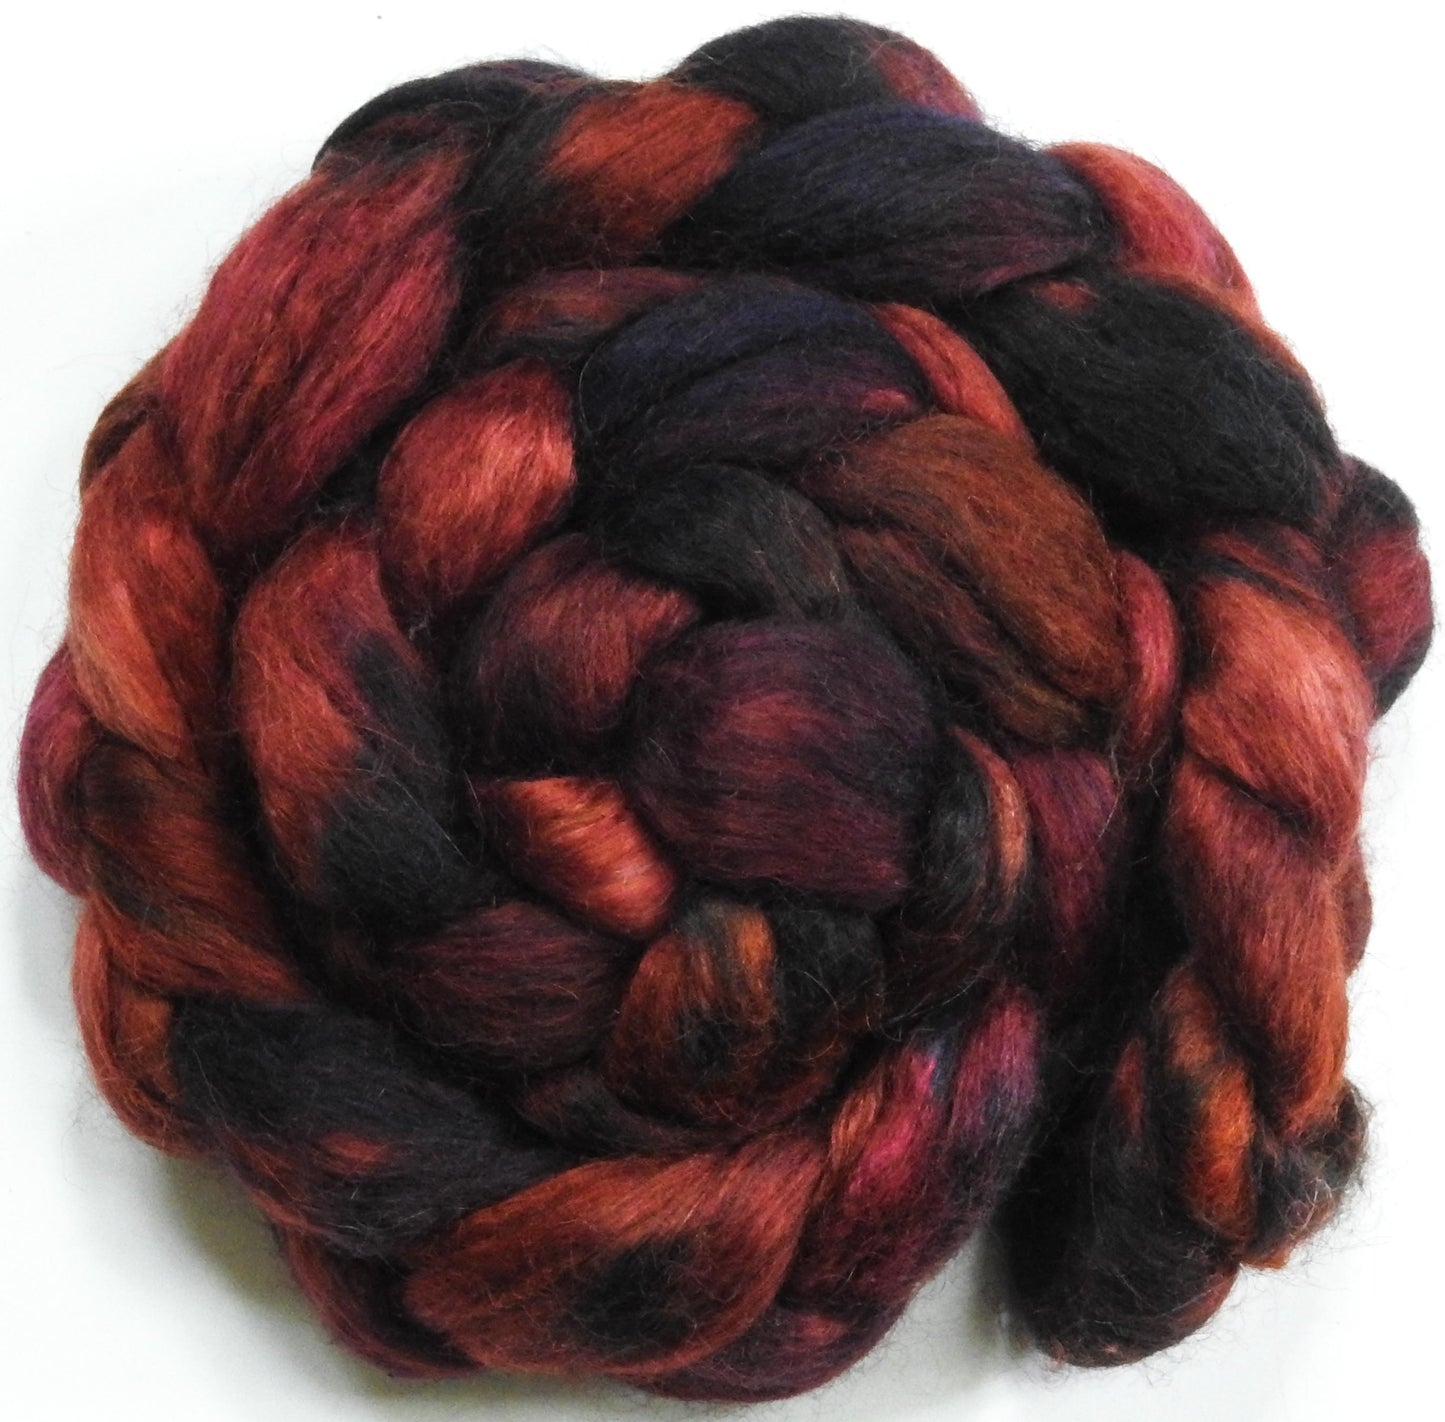 Jasper - Fusion Series - Batt in a Braid #52- Wensleydale/ Mulberry silk/ Polwarth (60/25/15)